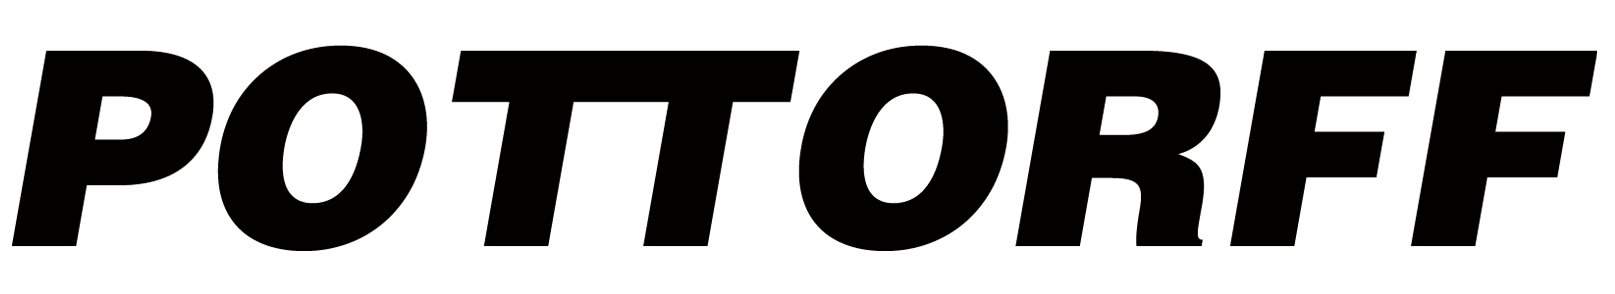 Pottorff-Logo-Black.png